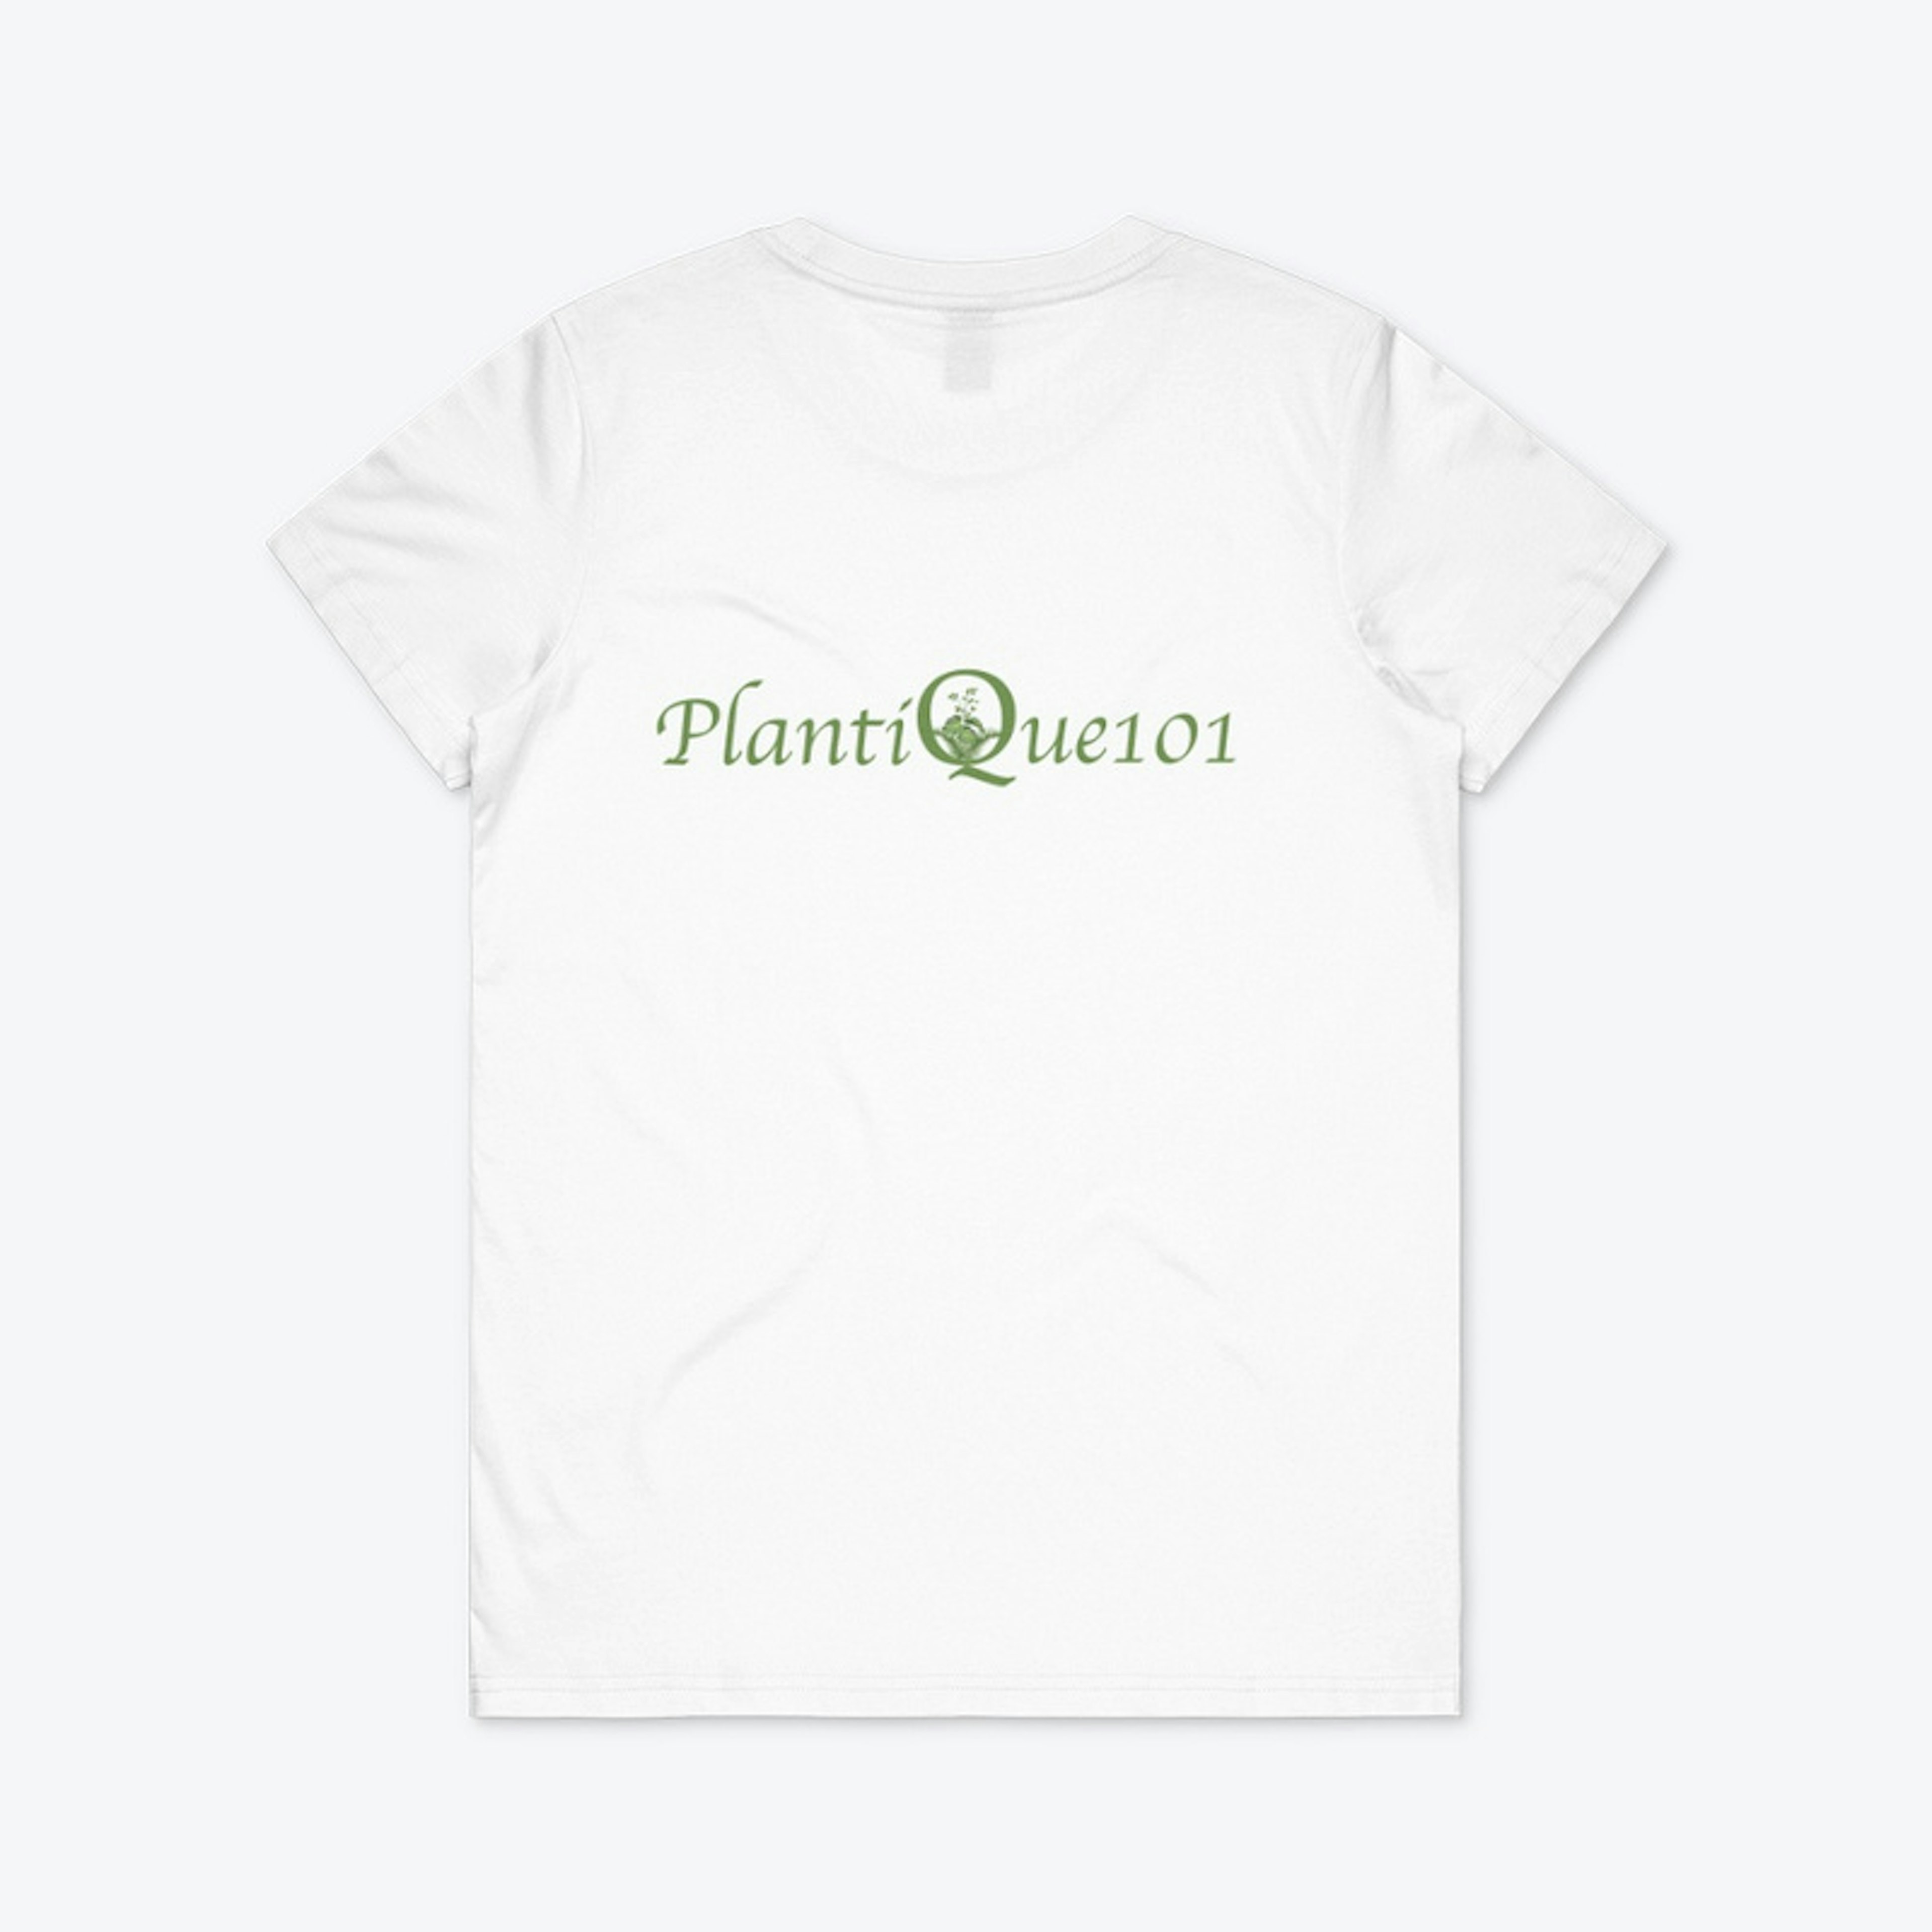 Plantique101